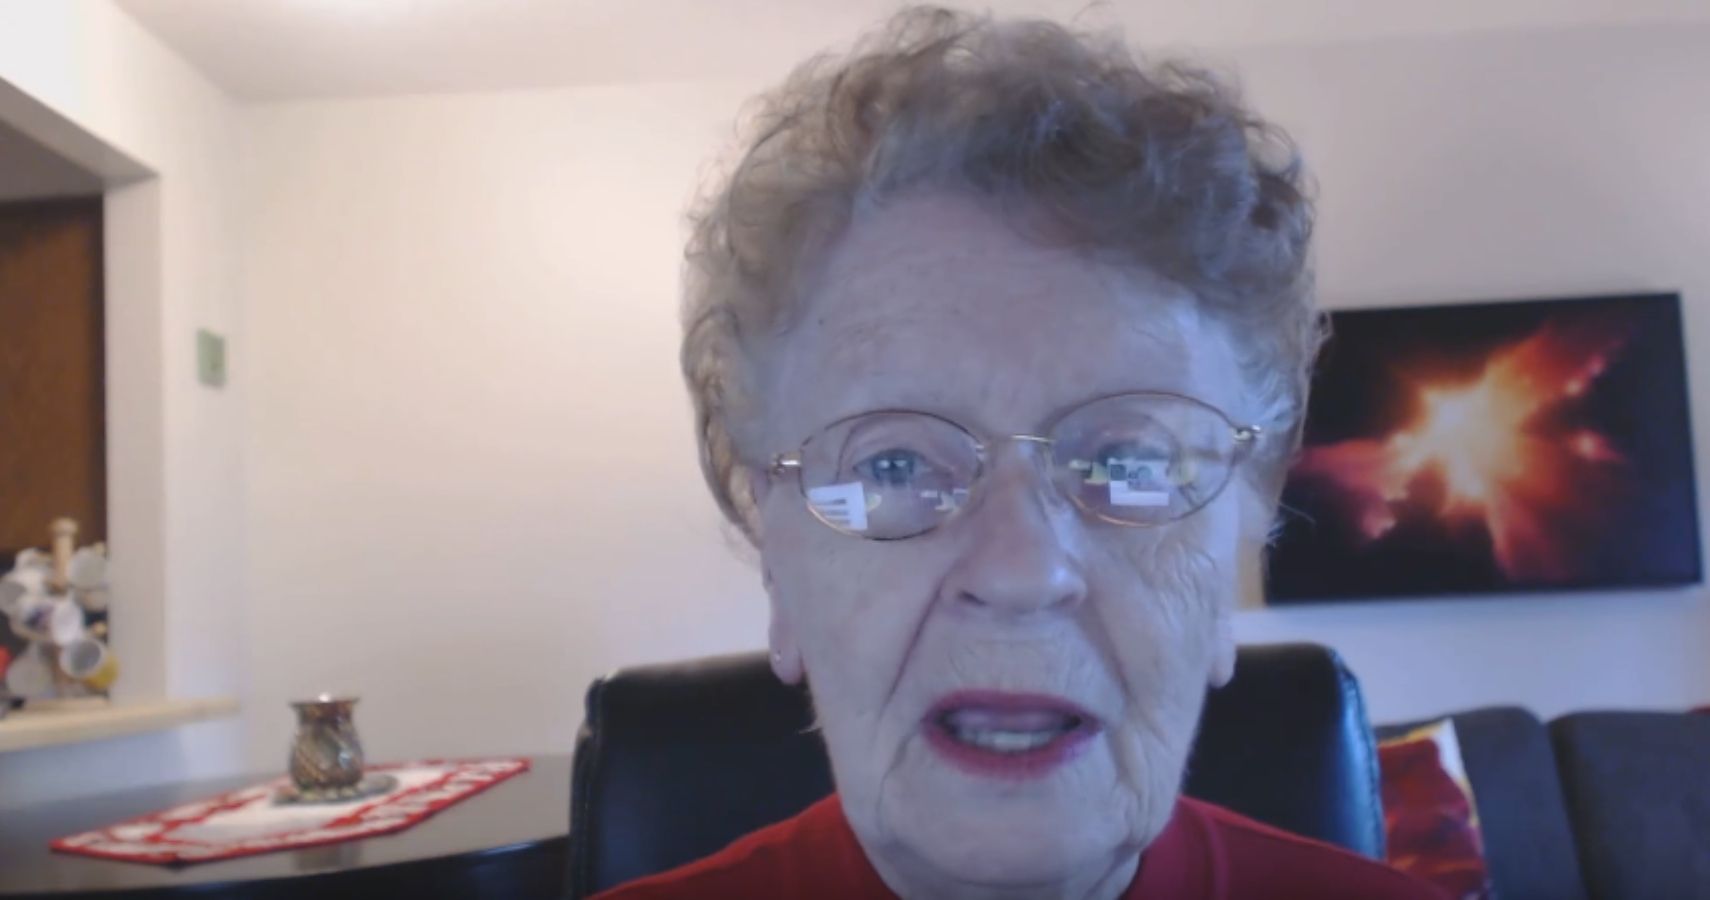 Skyrim grandma will be an Elder Scrolls 6 NPC thanks to fan